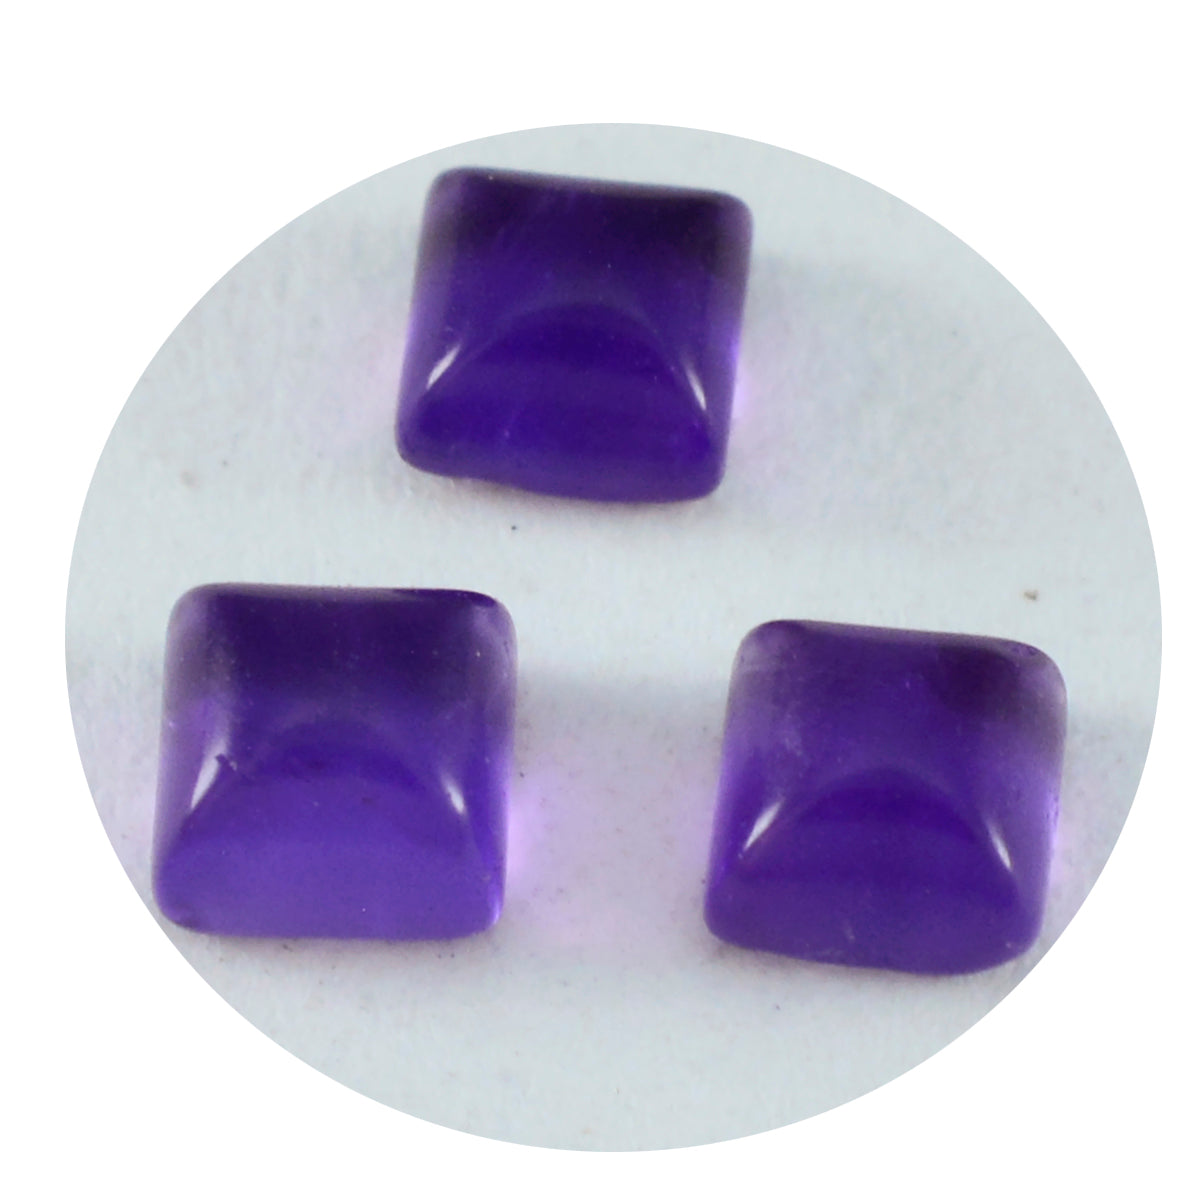 Riyogems 1PC Purple Amethyst Cabochon 8x8 mm Square Shape pretty Quality Gemstone